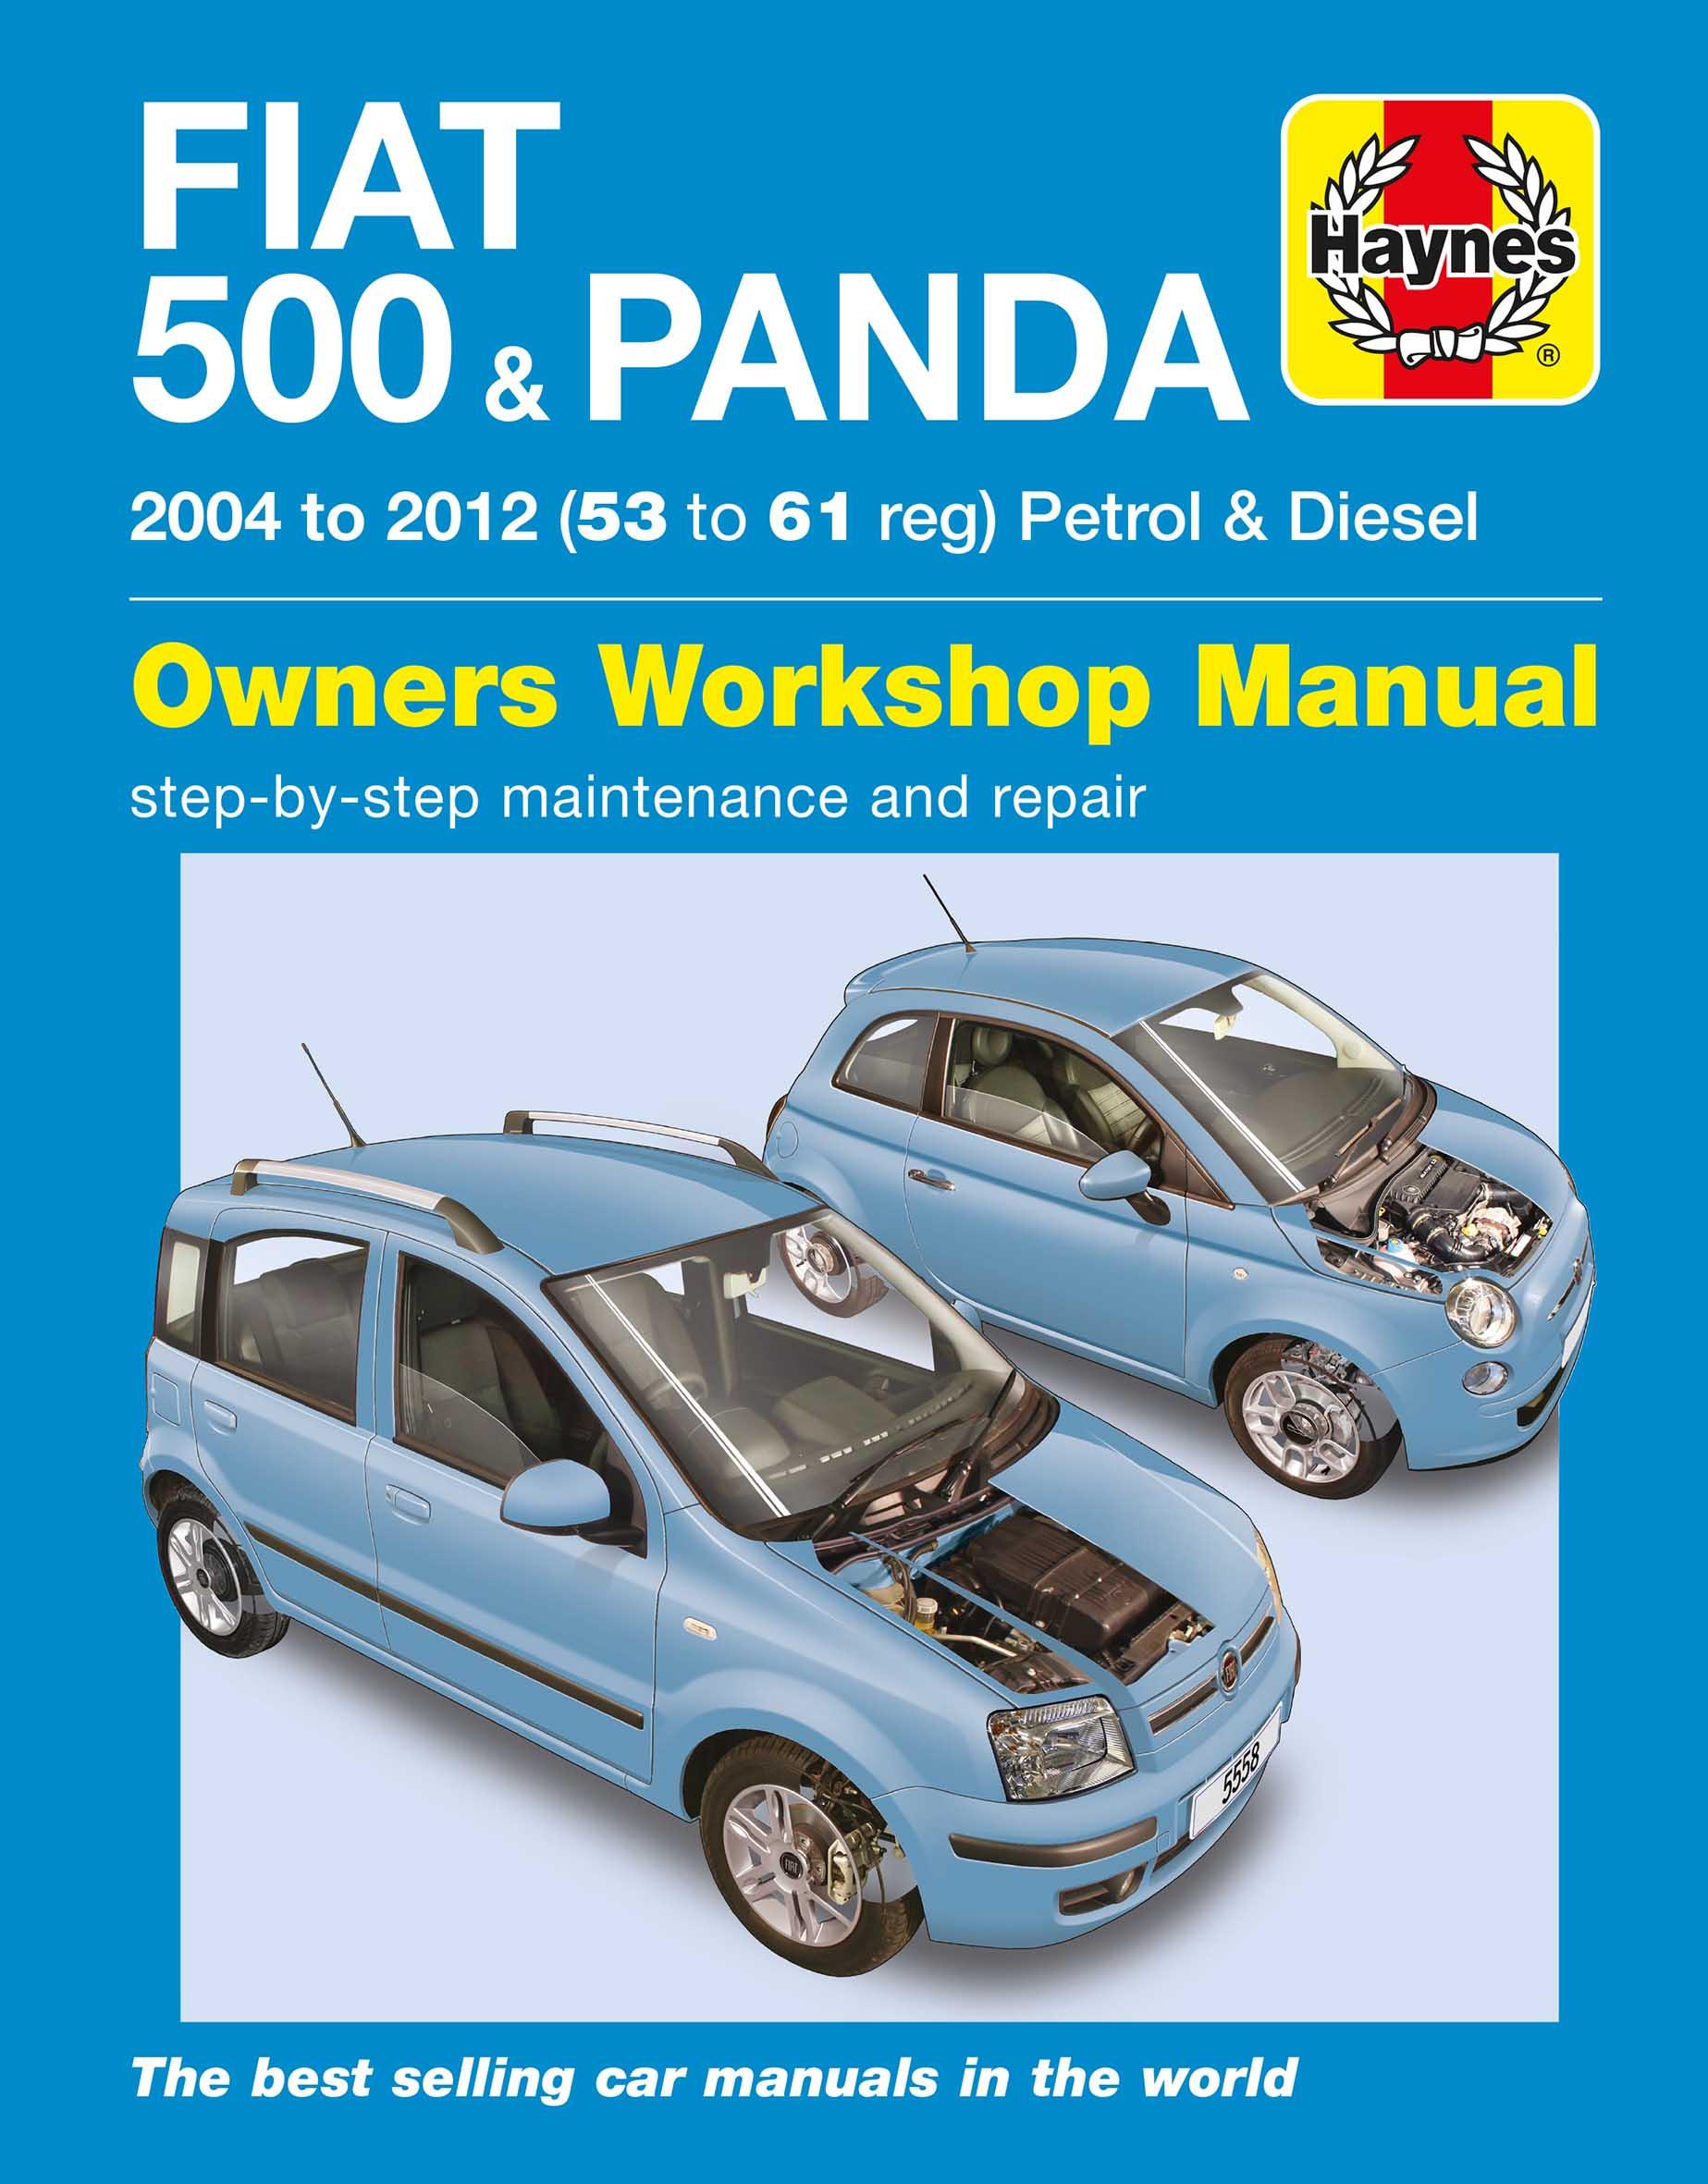 Haynes Fiat 500 & Panda (04 - 12) Manual